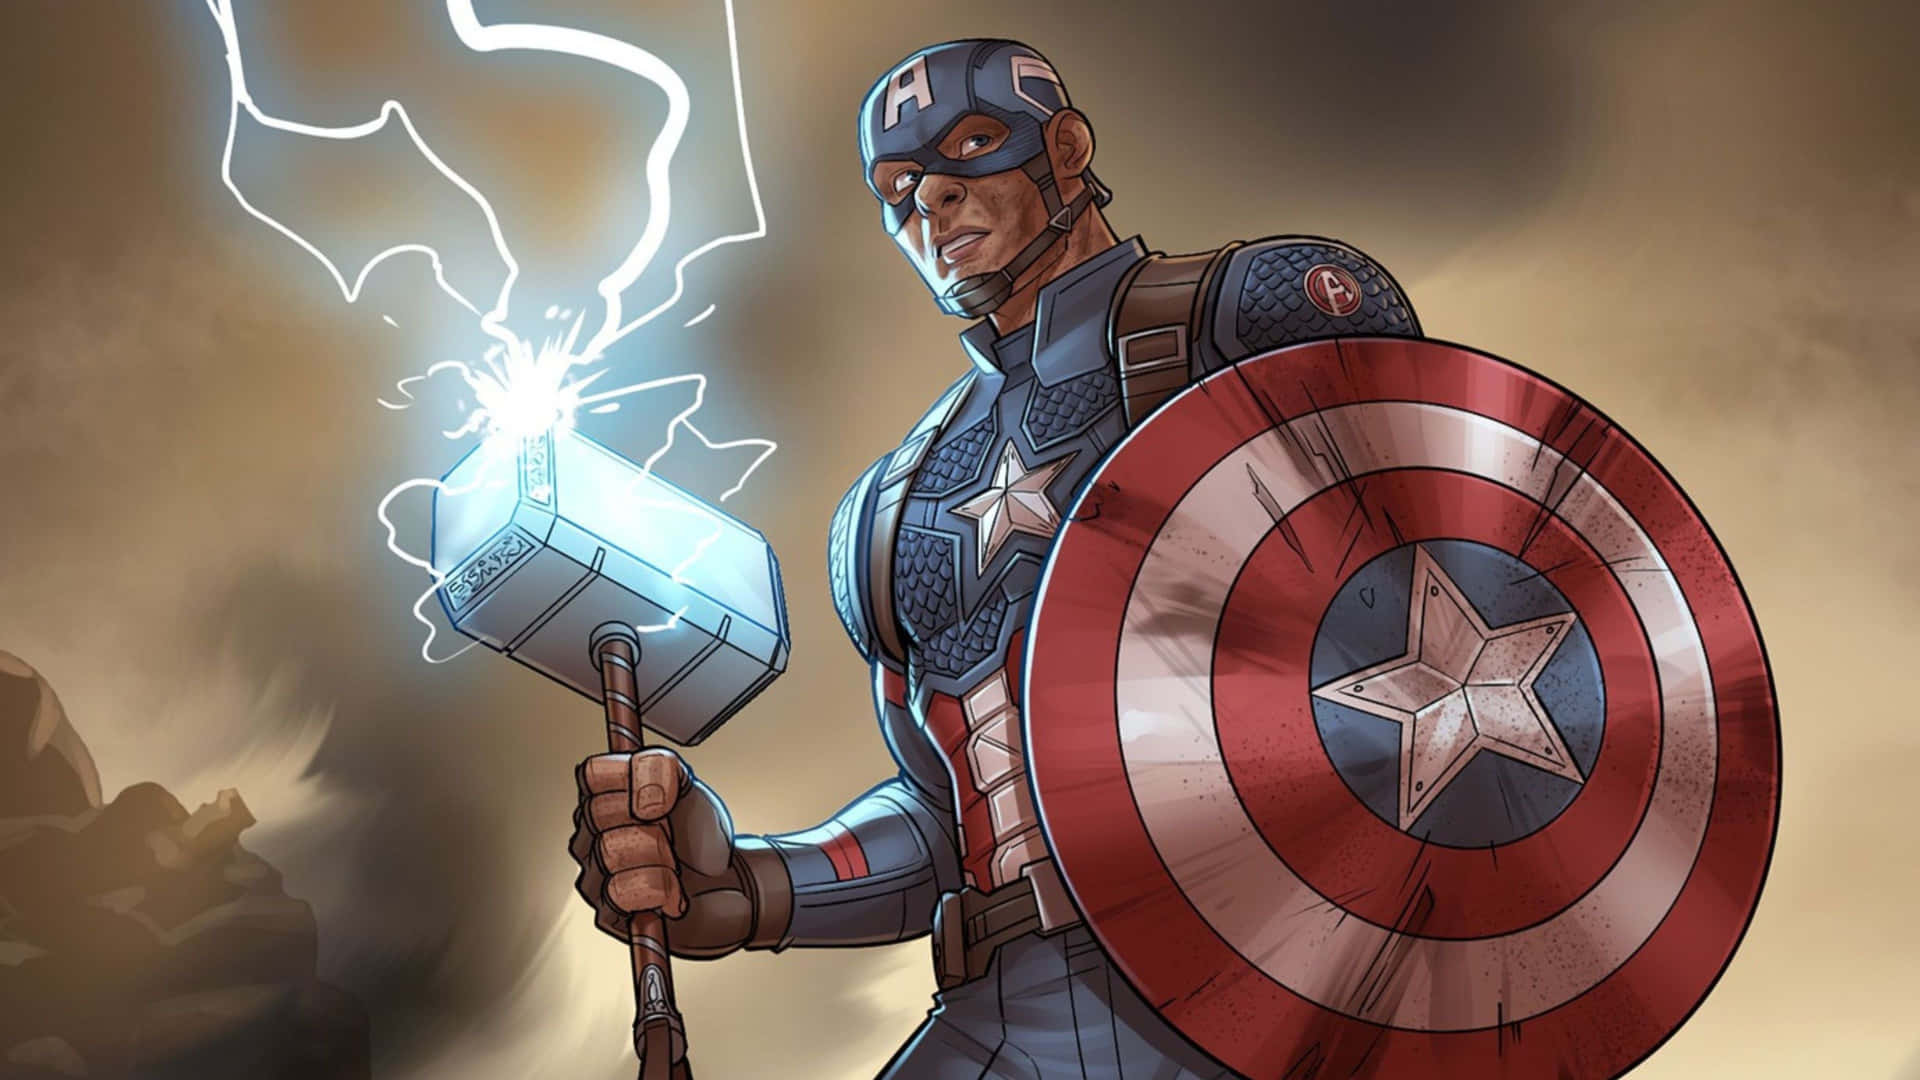 Captain America Ready to Take On Enemies